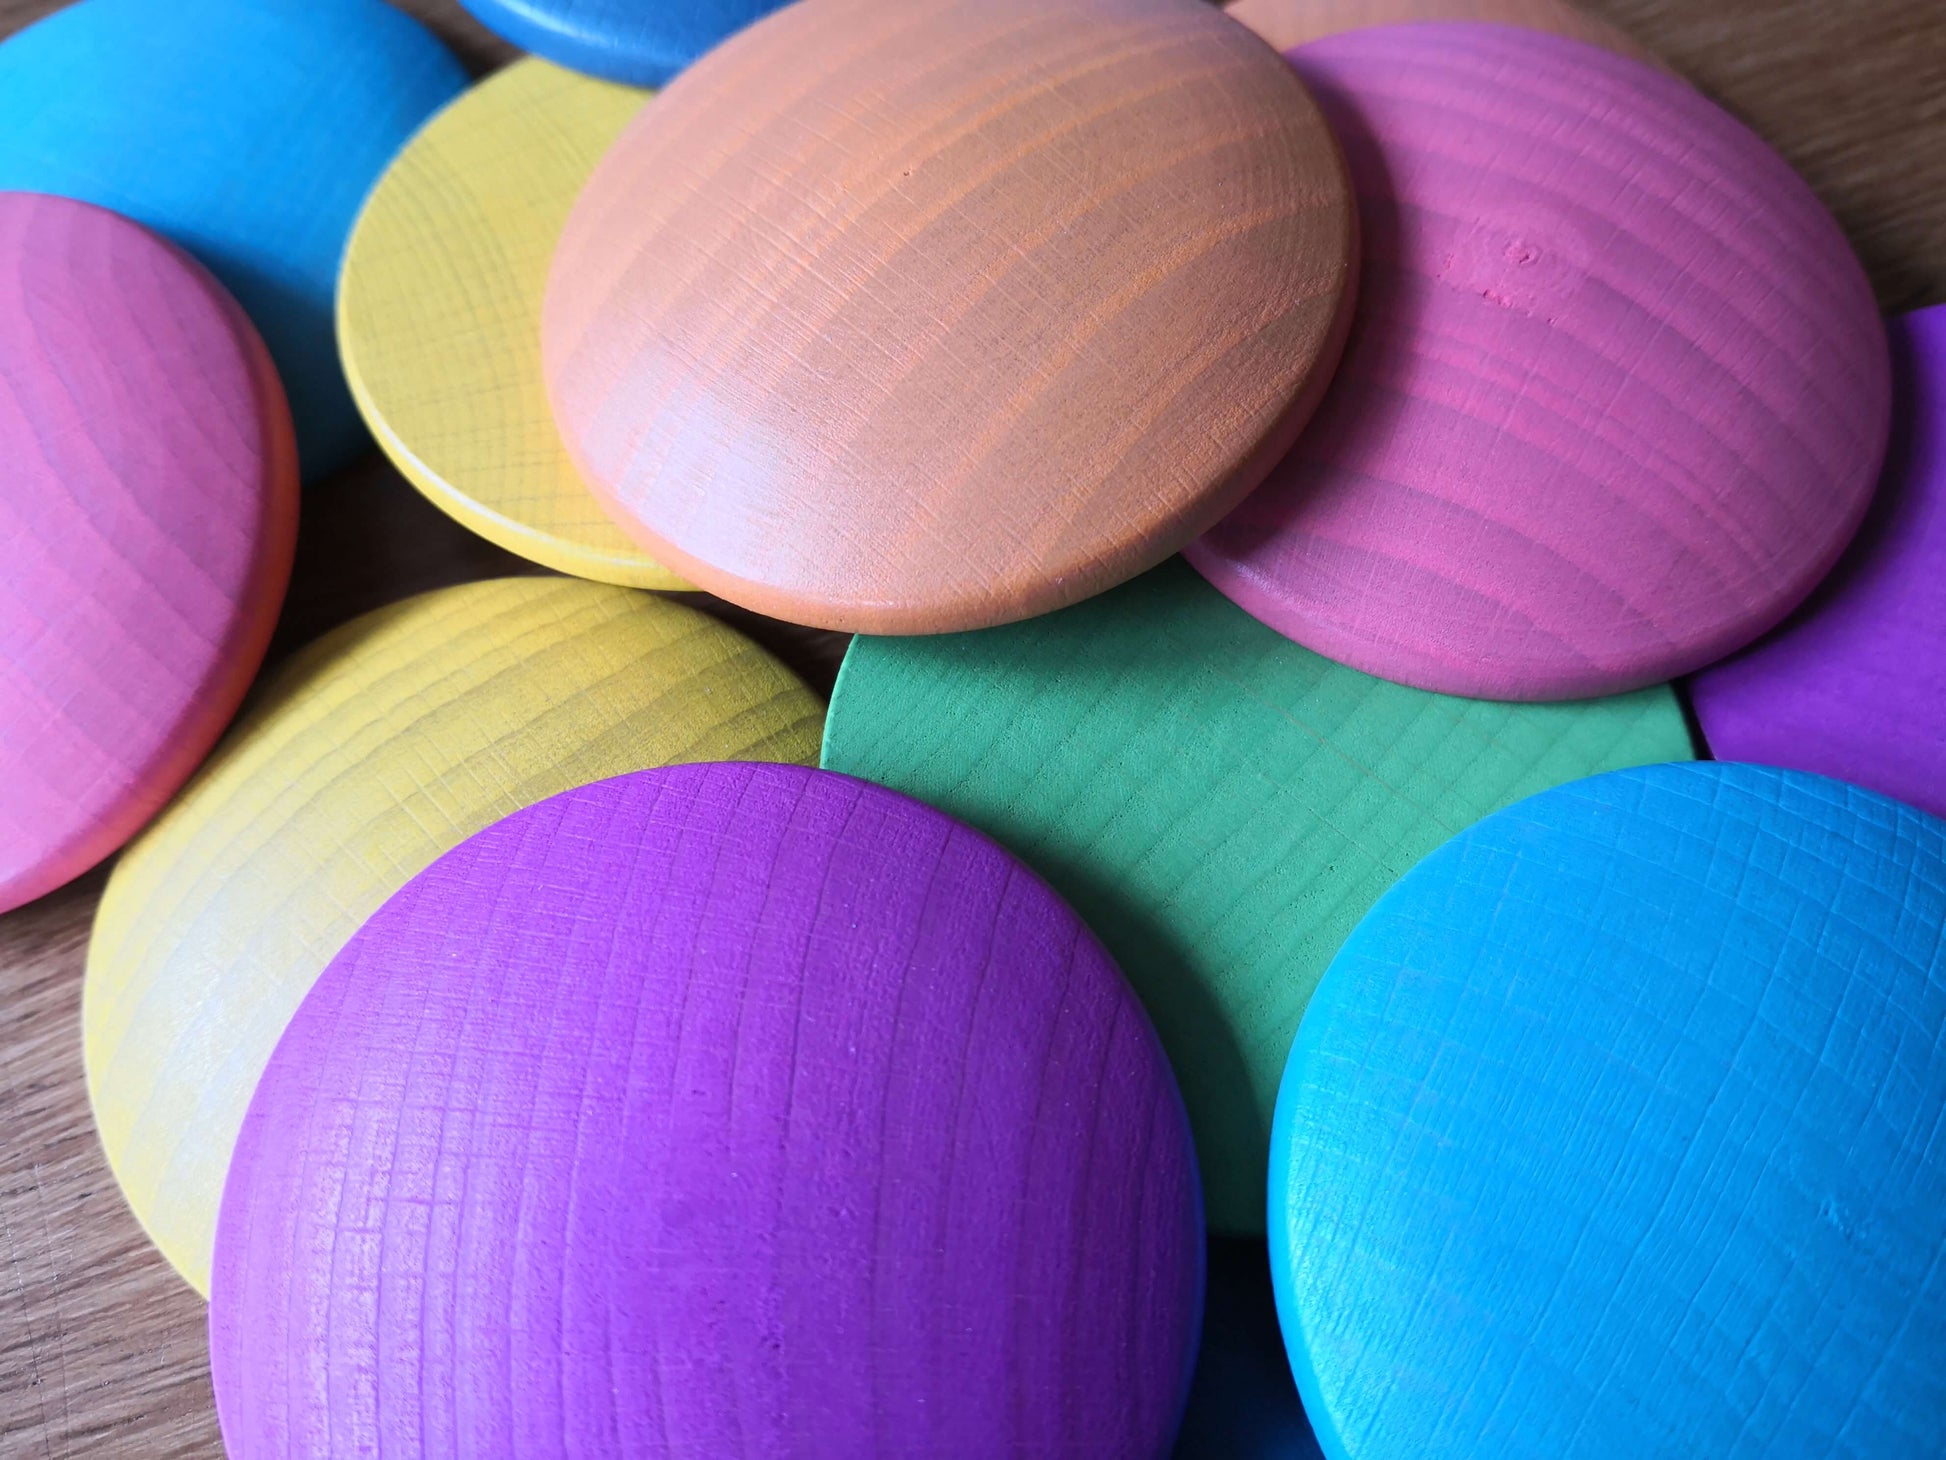 Rainbow wooden discs